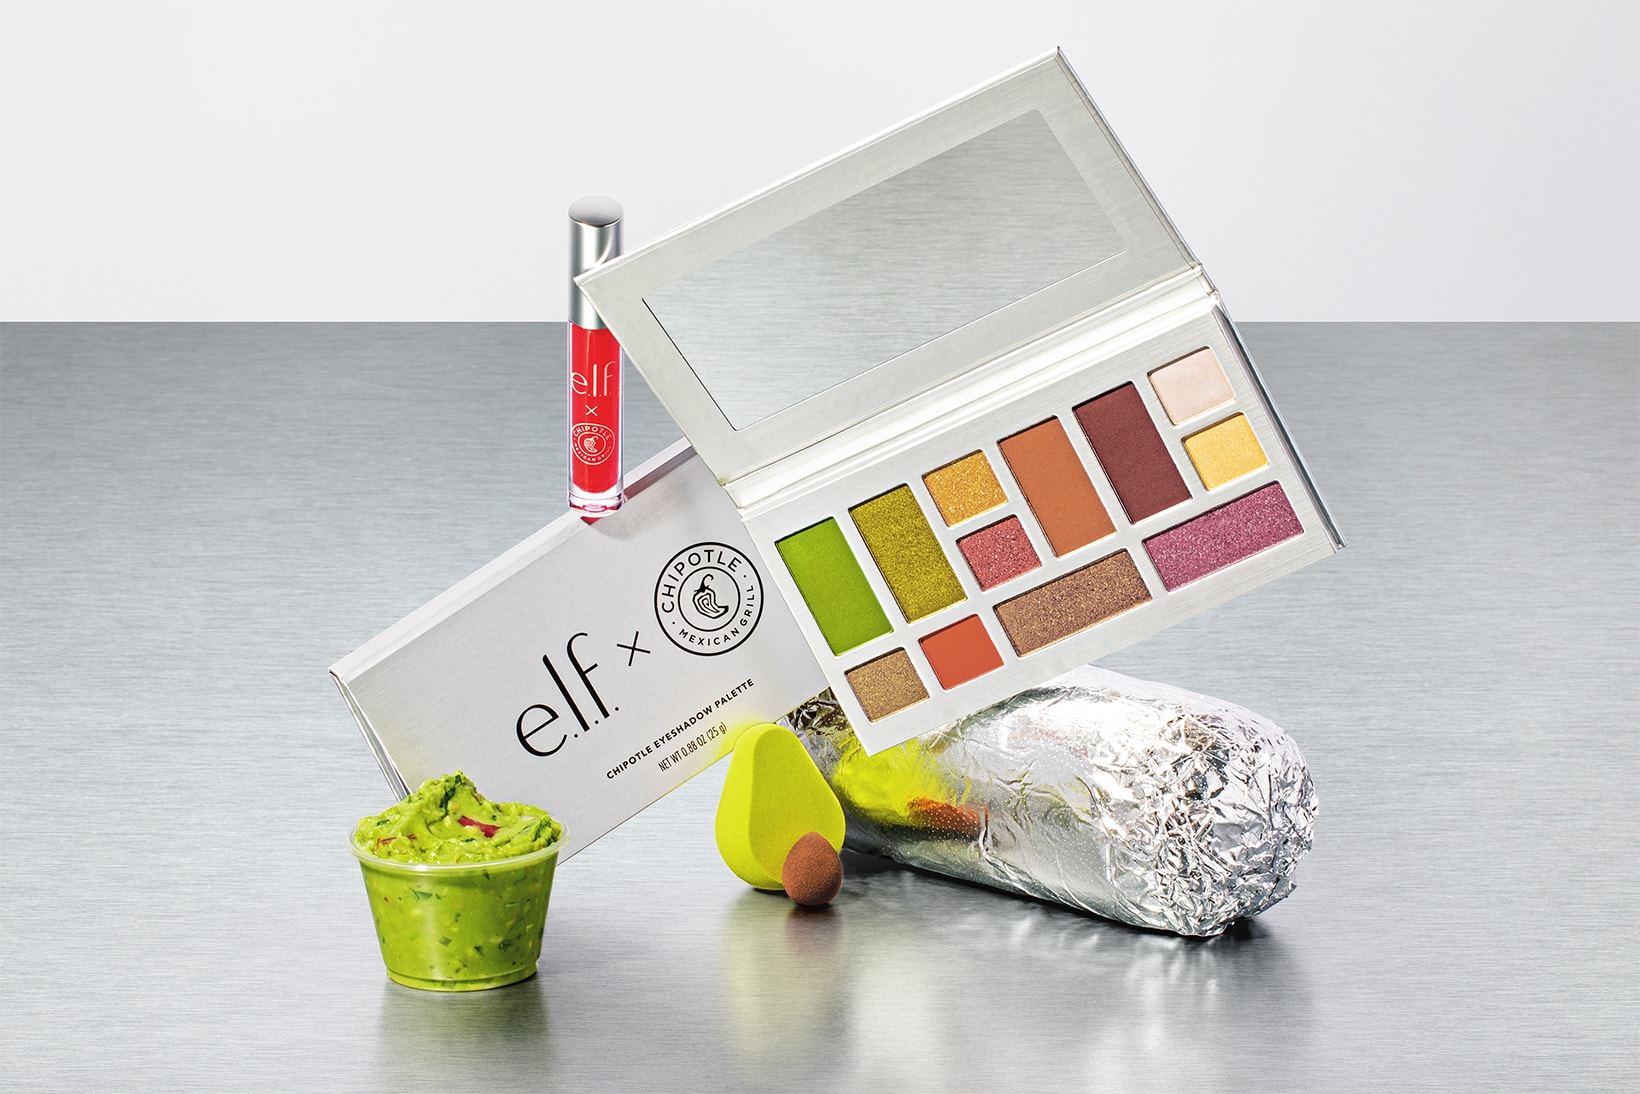 elf cosmetics chipotle collaboration eyeshadow lip gloss makeup sponge bag custom burrito bowl